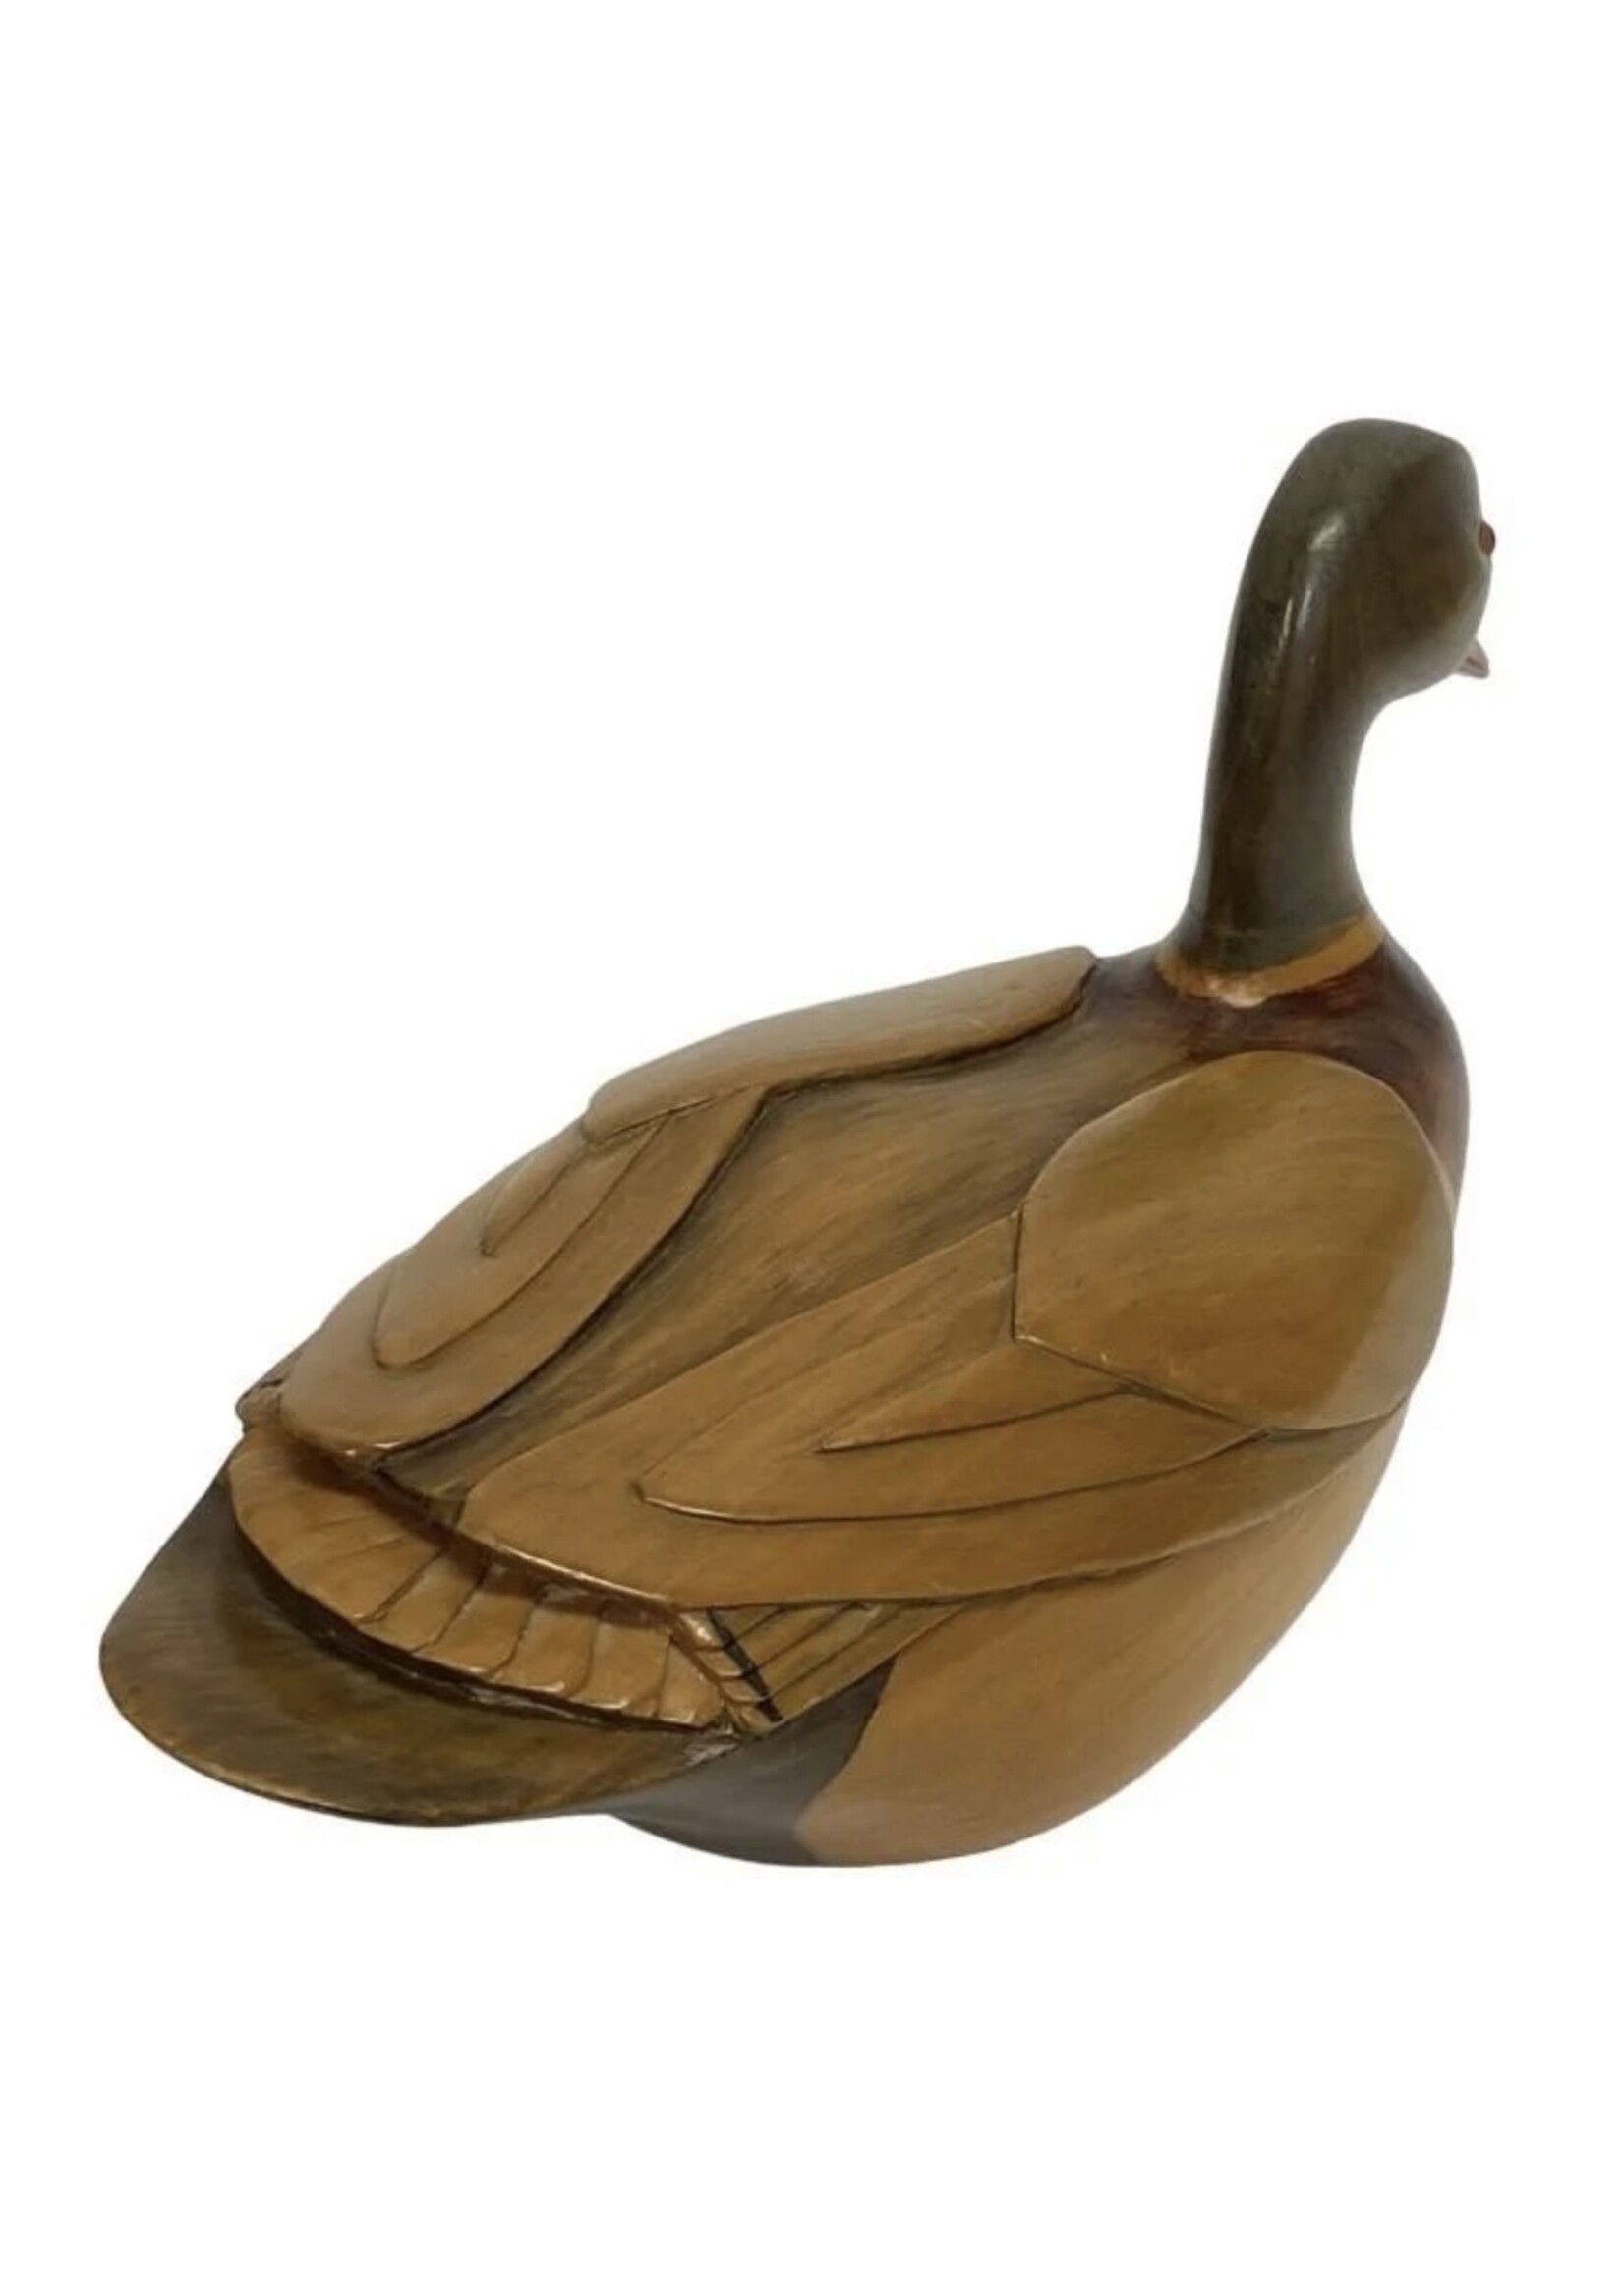 Mallard Duck Carving By John Grainger